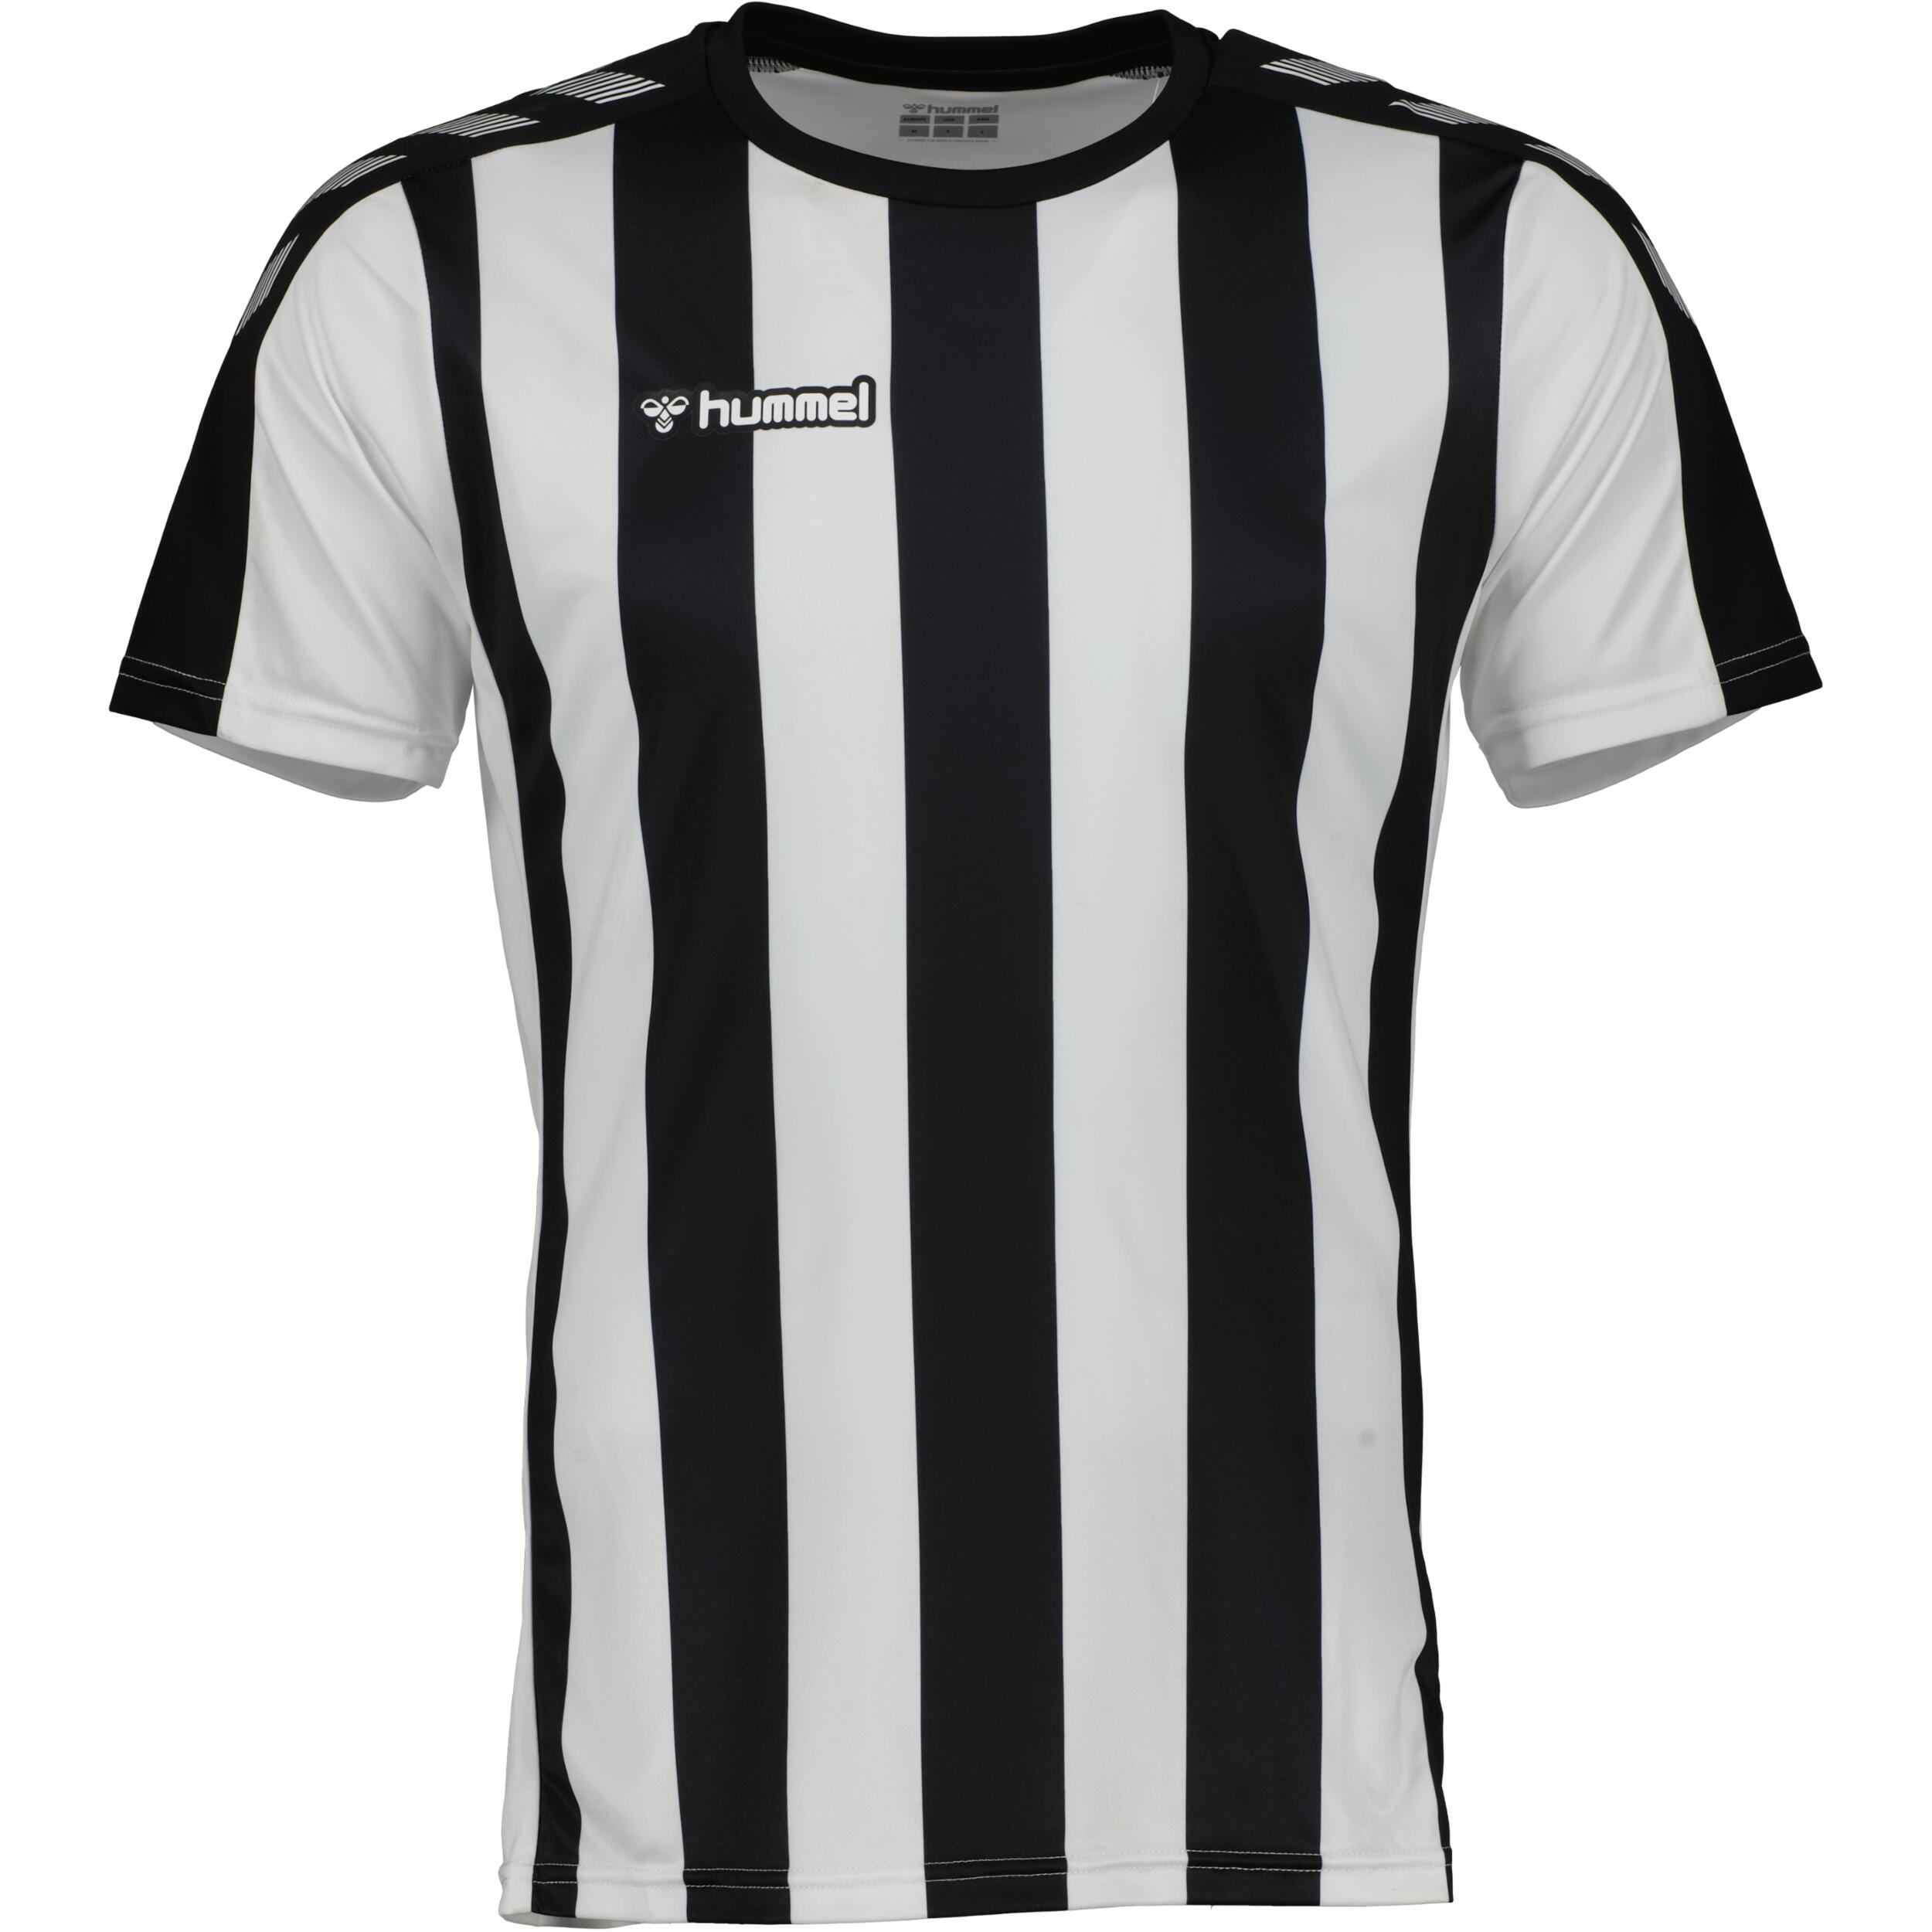 HUMMEL Stripe jersey for kids, great for football, in black/white